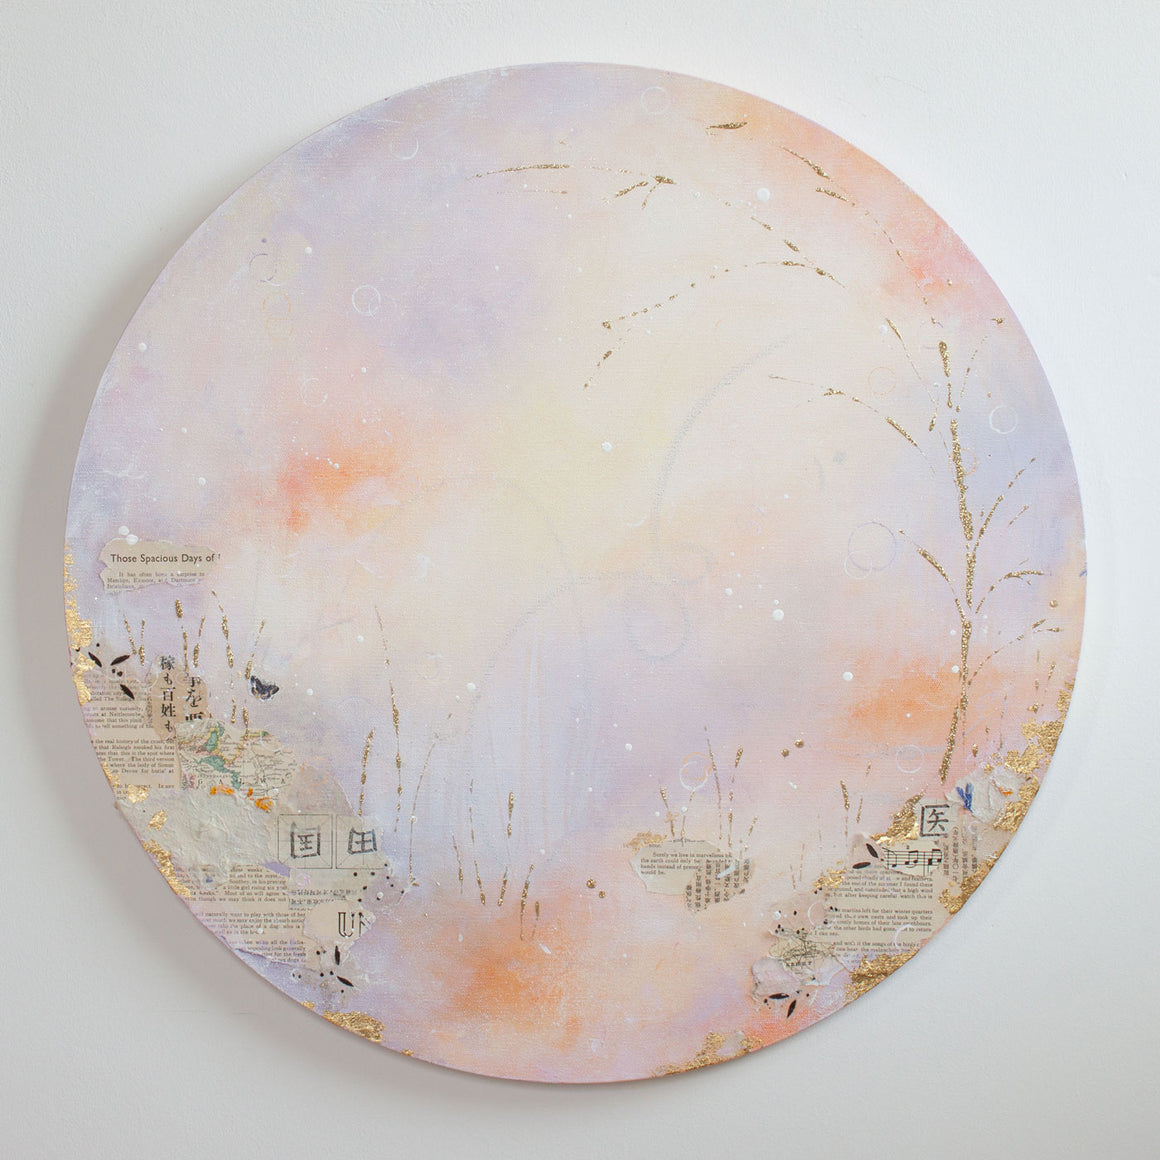 Softly Underfoot |  Ephemera Moon Painting on 24 inch canvas